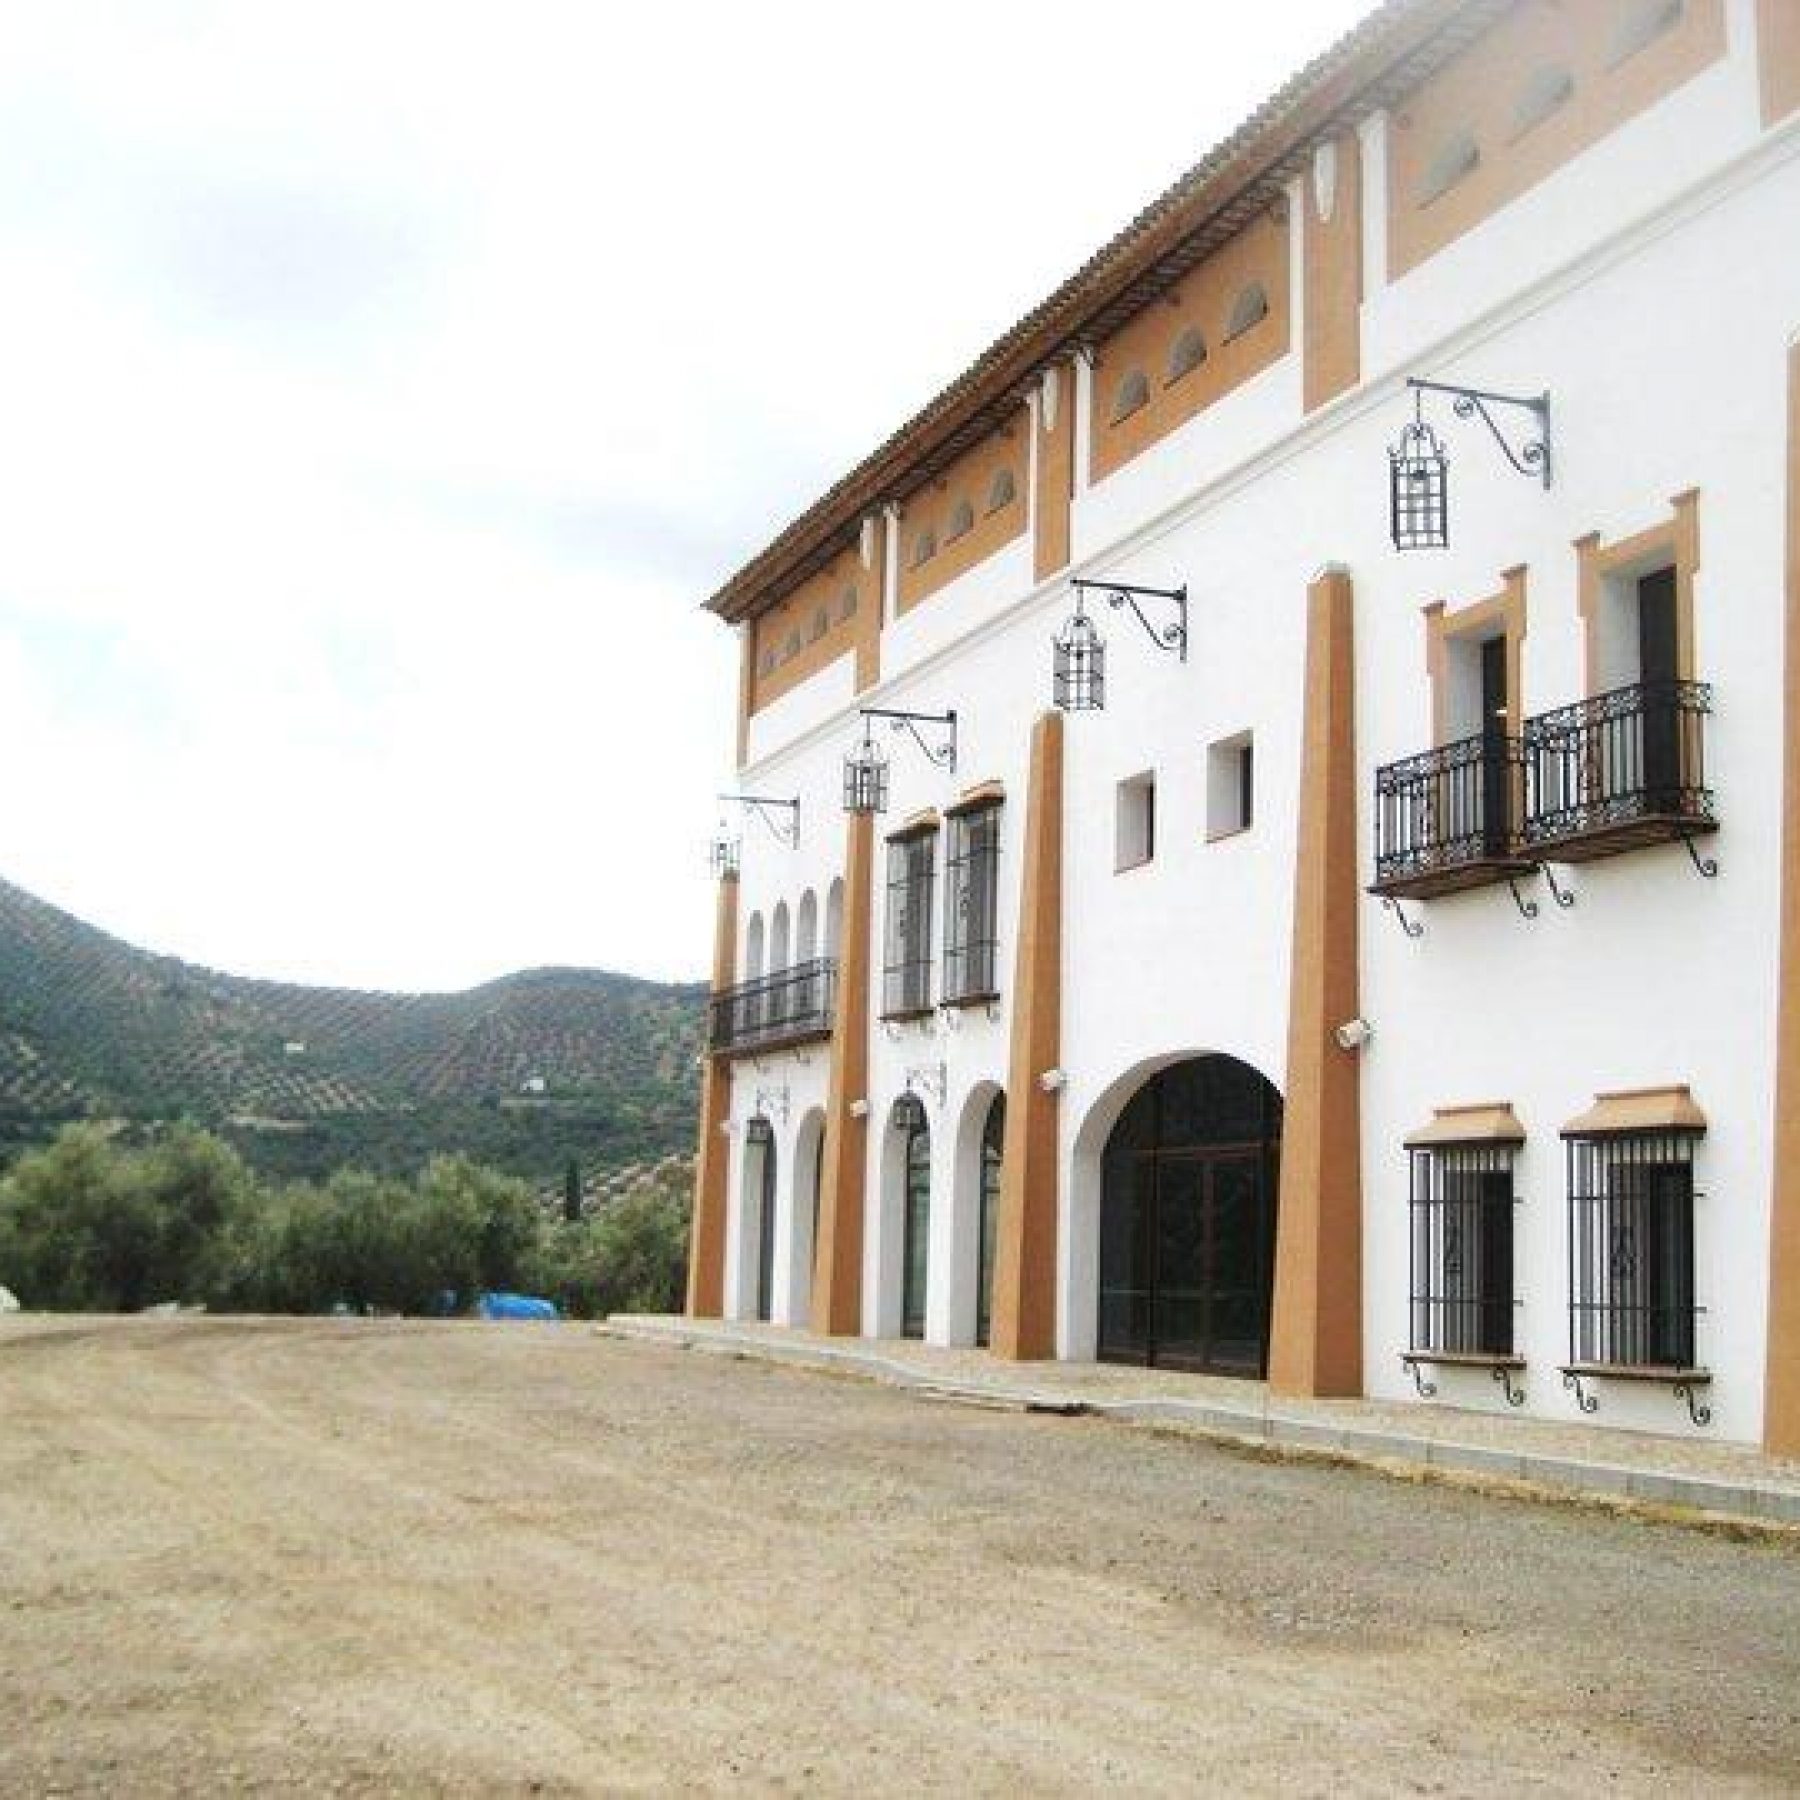 Visita a almazara Manuel Montes Marín, Priego de Córdoba 